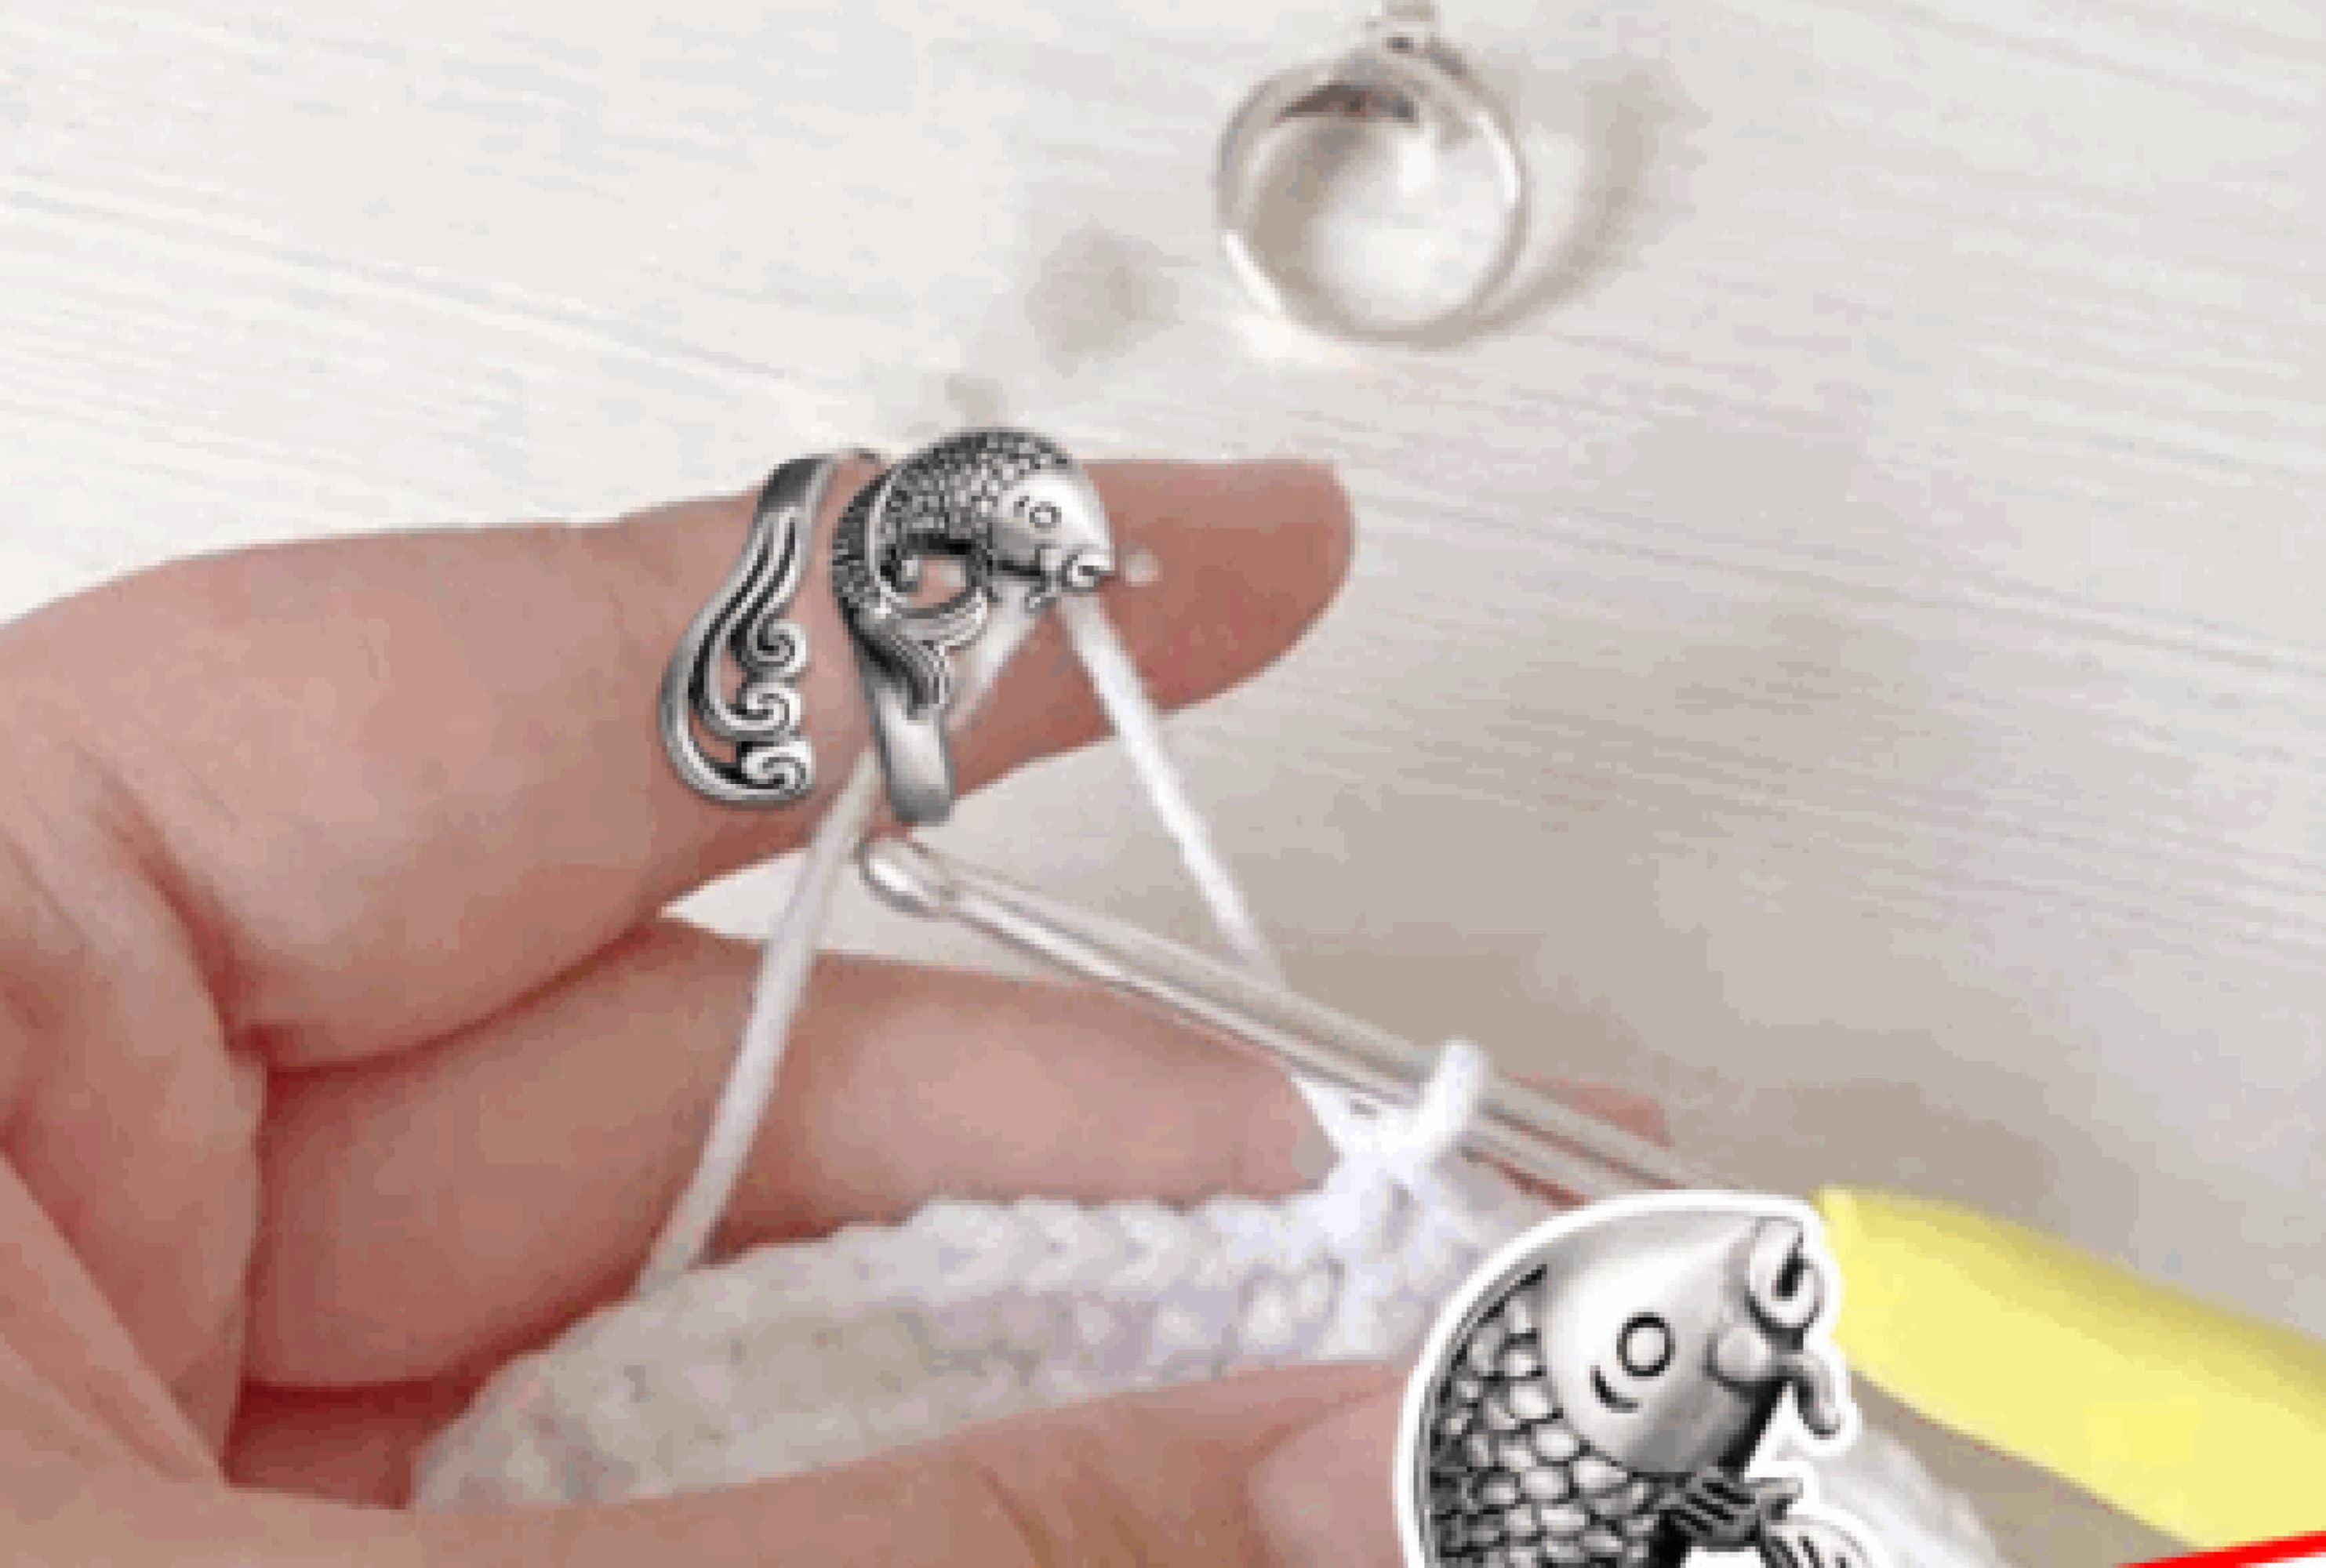 Carp crochet yarn tension guide ring setup tutorial 🤩These rings